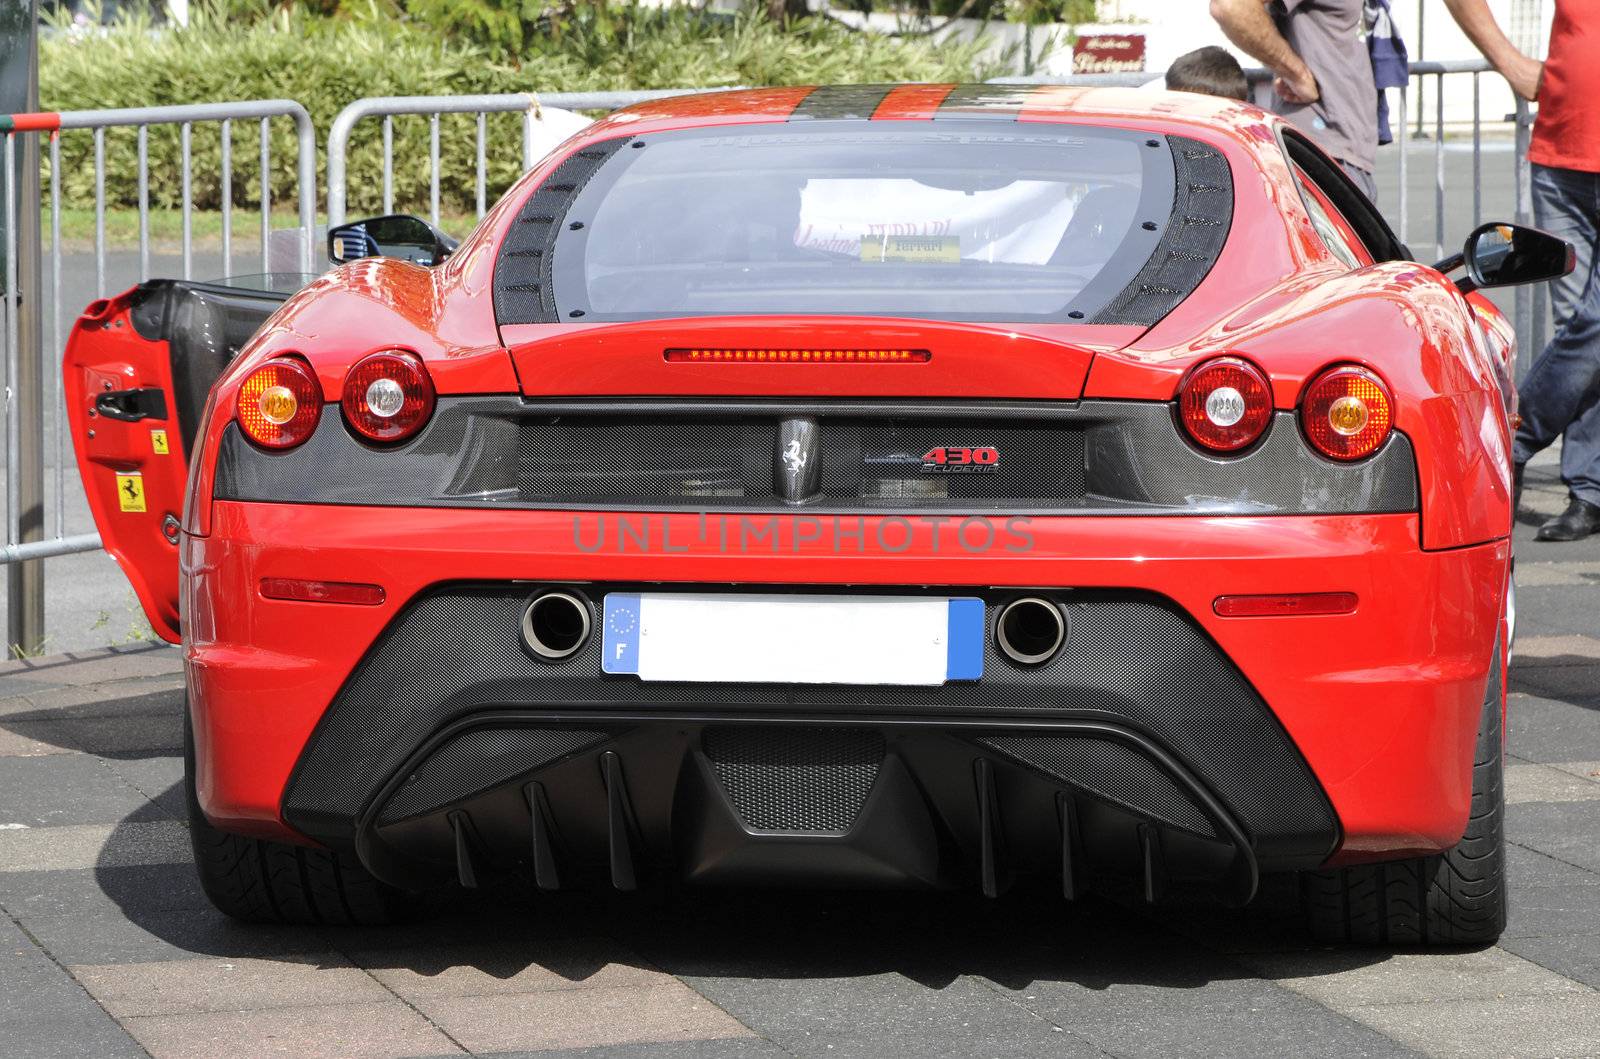 Back view of a F430 Scuderia Ferrari during a meeting